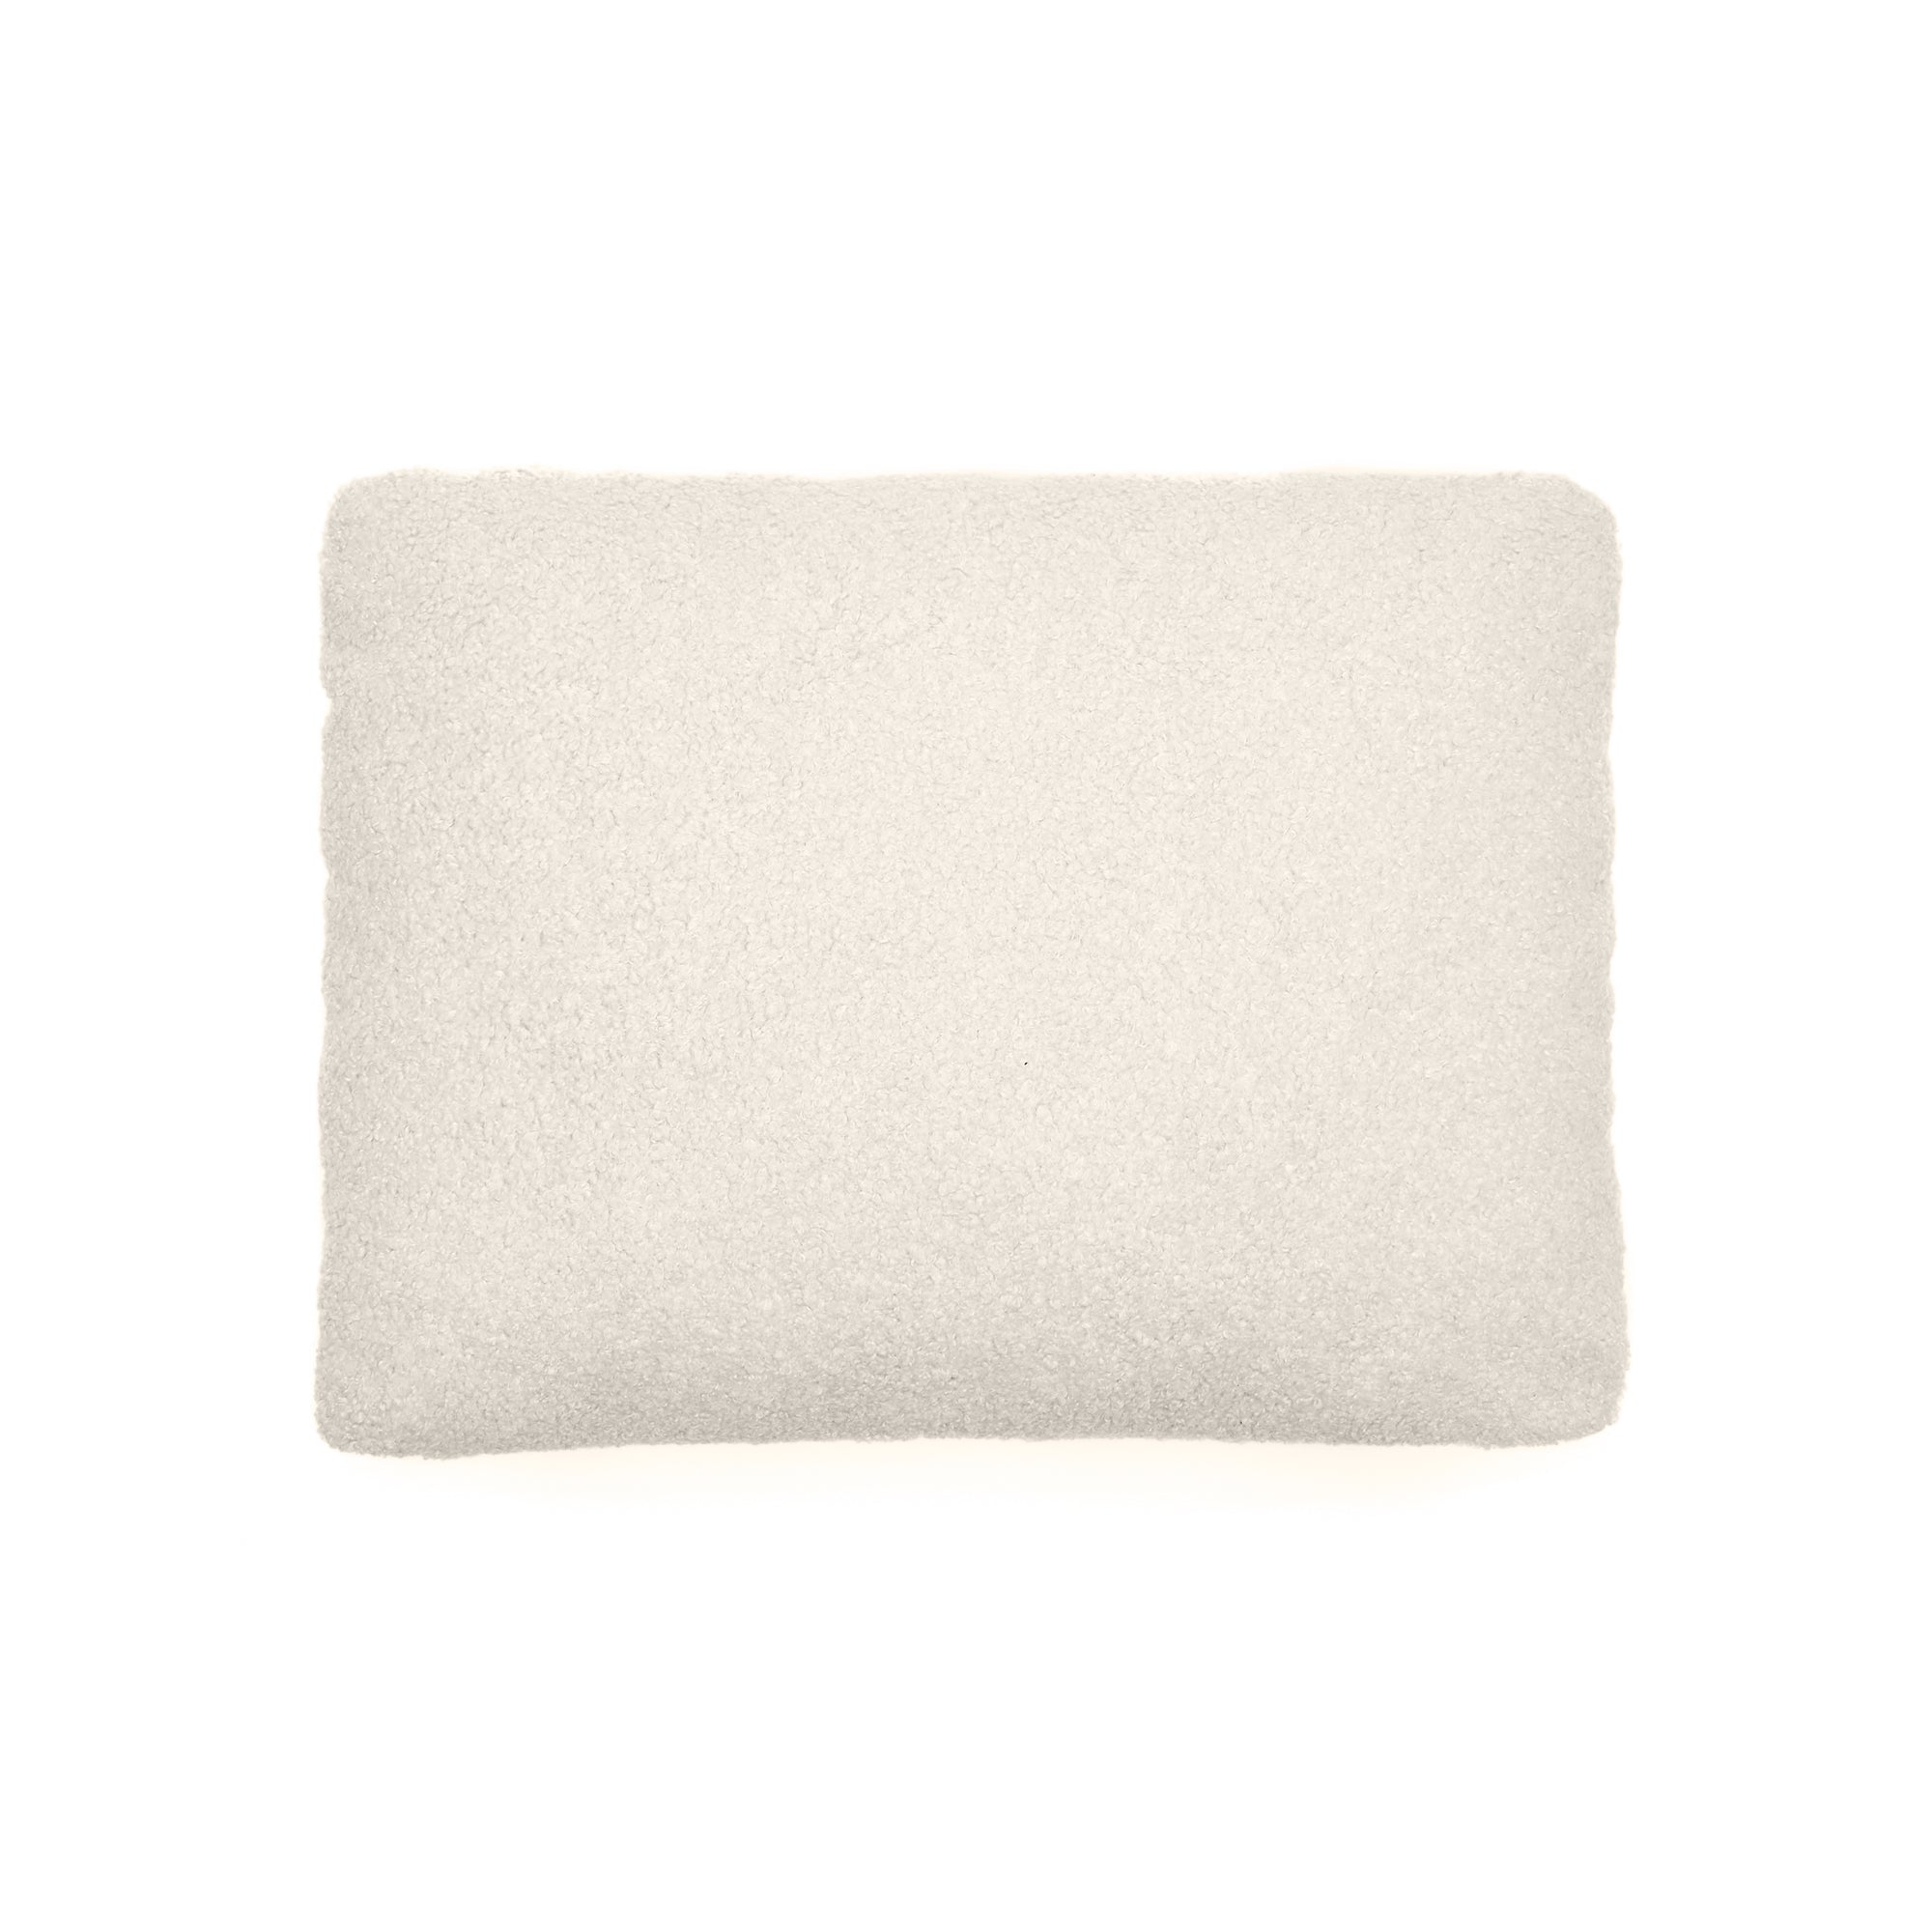 Martina cushion off-white shearling 47 x 36 cm